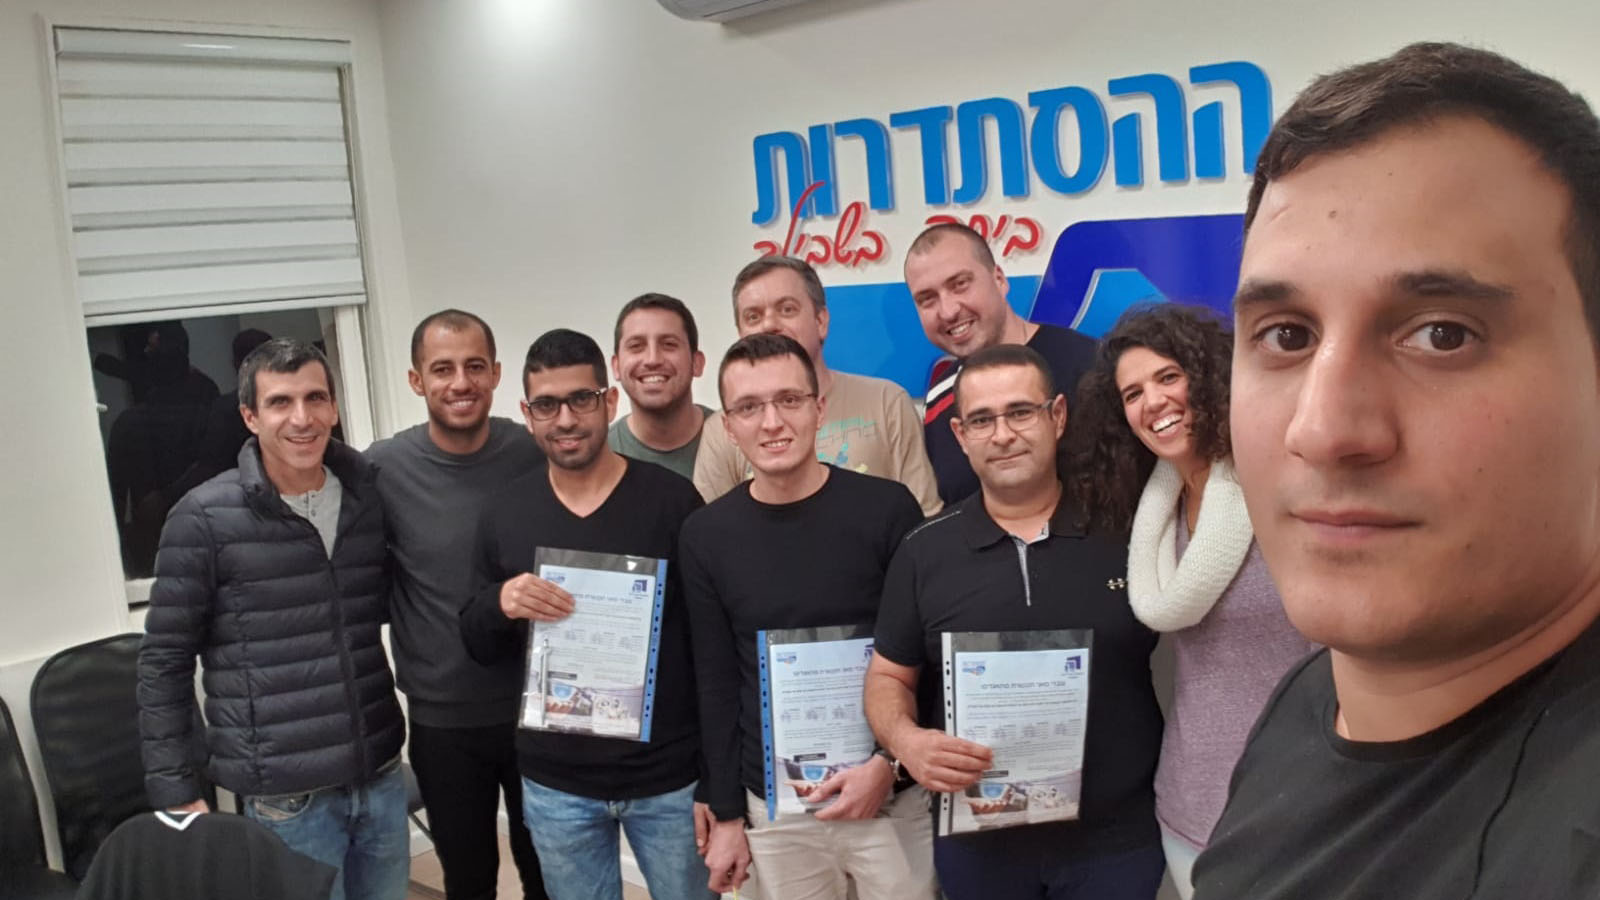 Suny Telecom workers united at the Histadrut, November 2018 (Photograph courtesy of Histadrut press office)